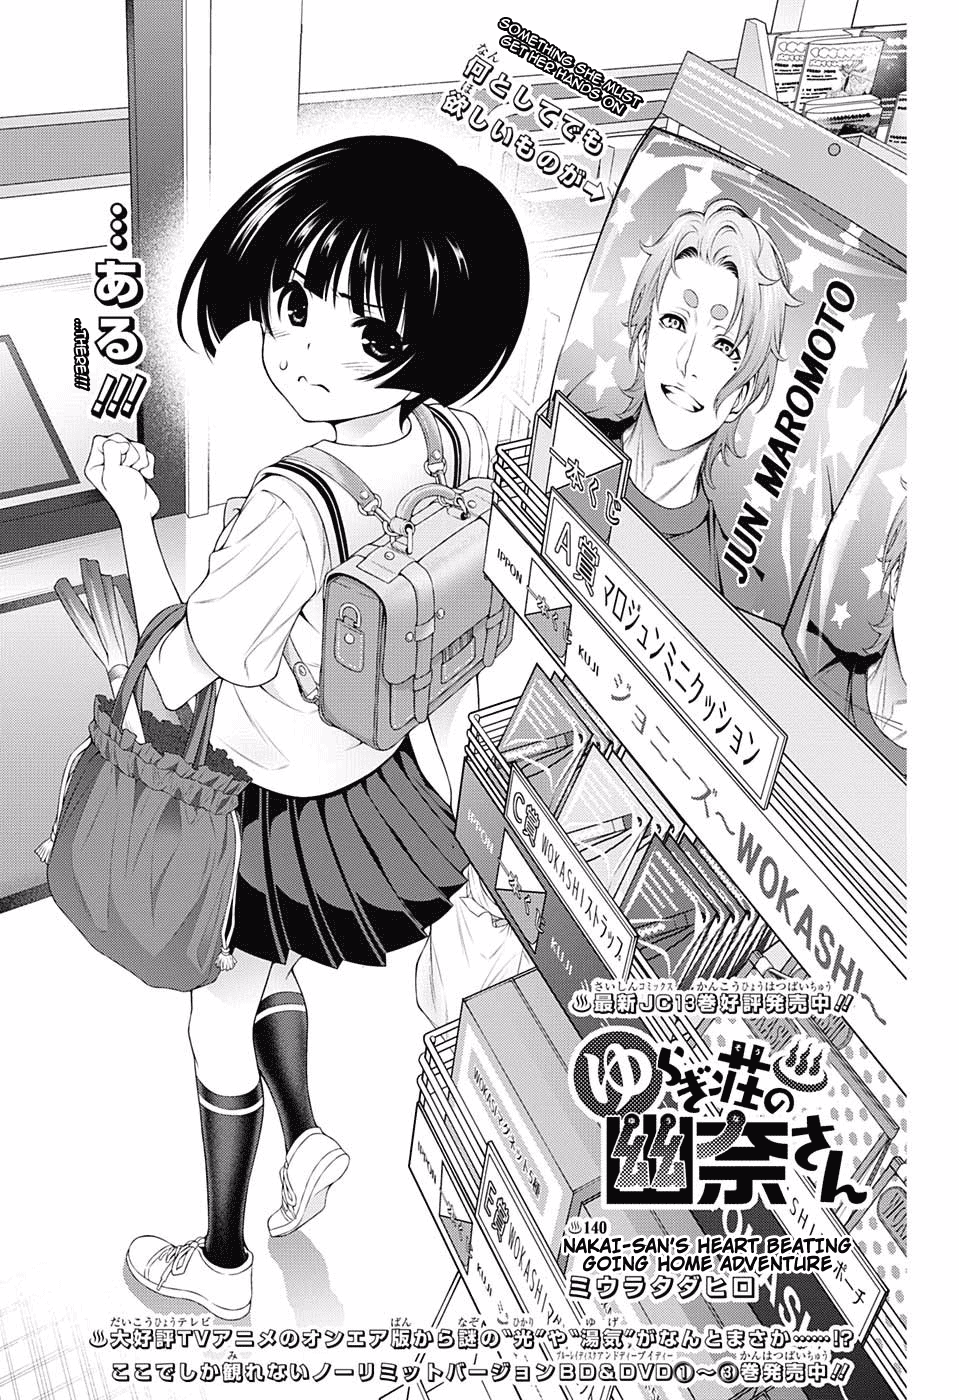 Yuragi-Sou No Yuuna-San Chapter 140: Nakai-San S Heart Beating Going Home Adventure - Picture 1